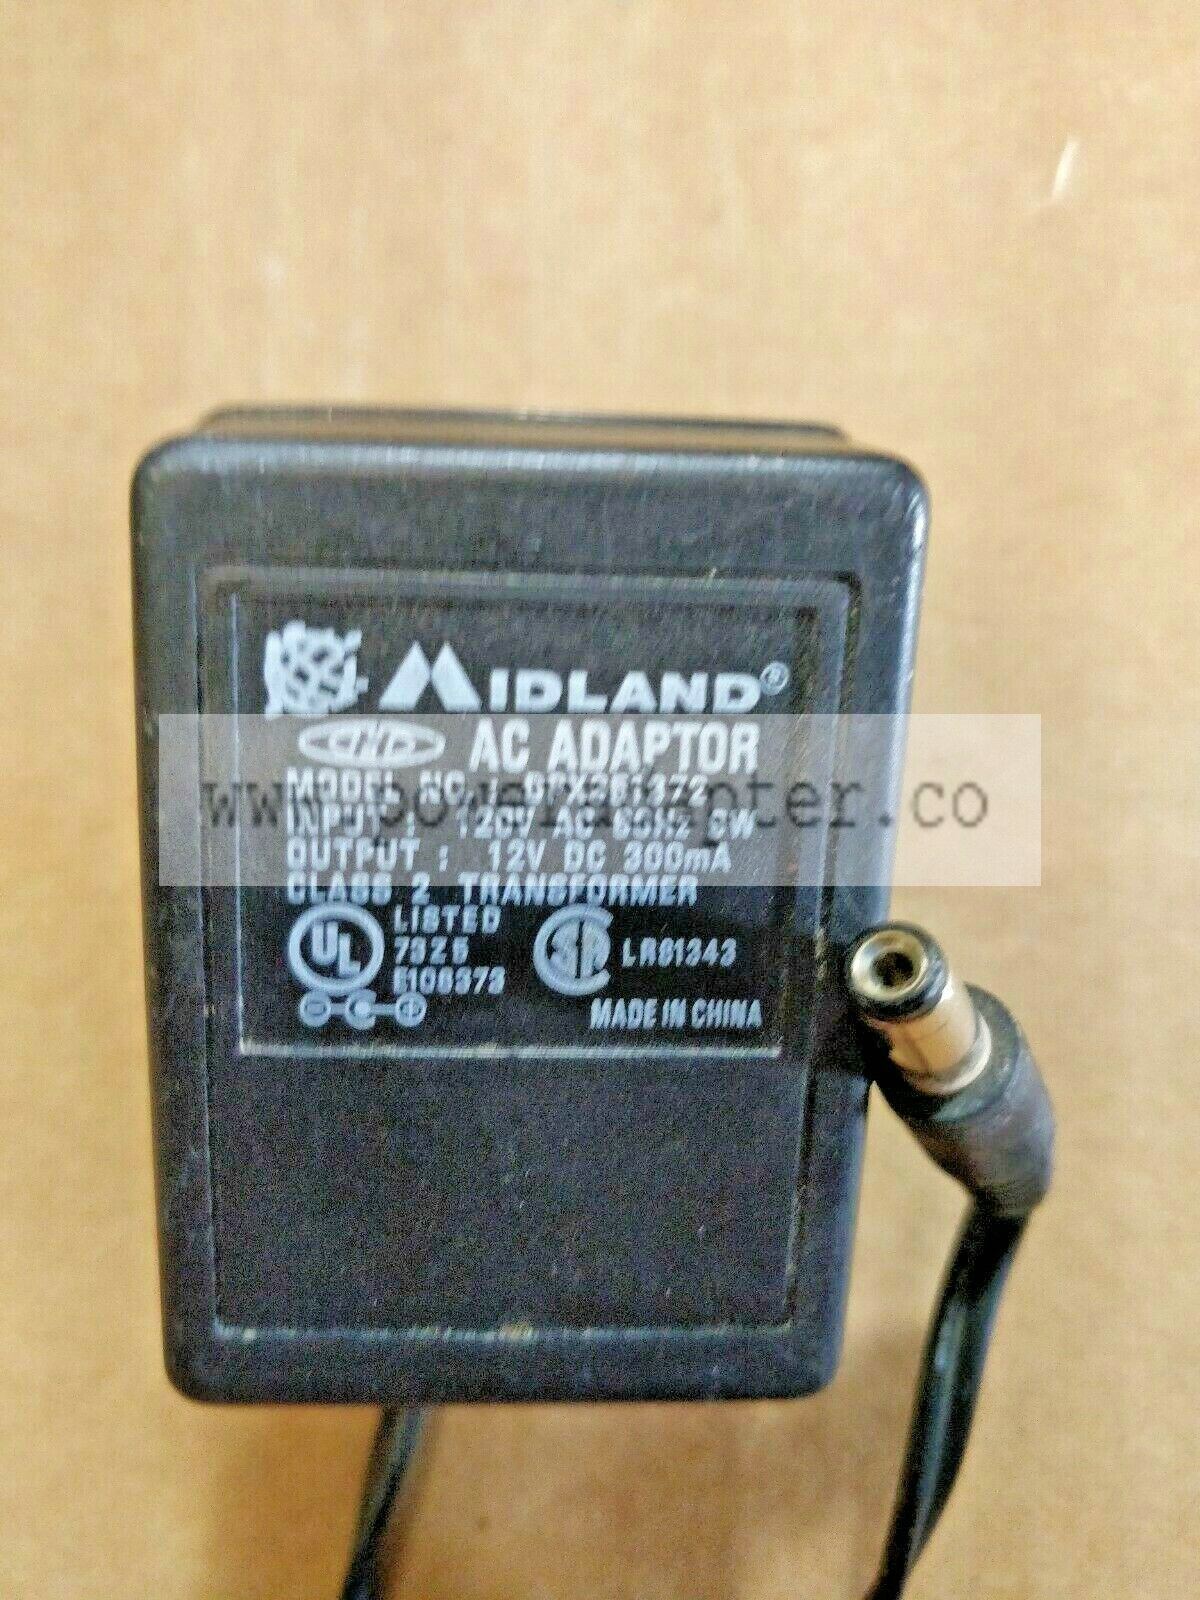 12V 300mA Midland AC Adapter - Midland DPX351372 Model: DPX351372 Output Voltage: 12 V Type: AC/AC Adapter Brand: M - Click Image to Close